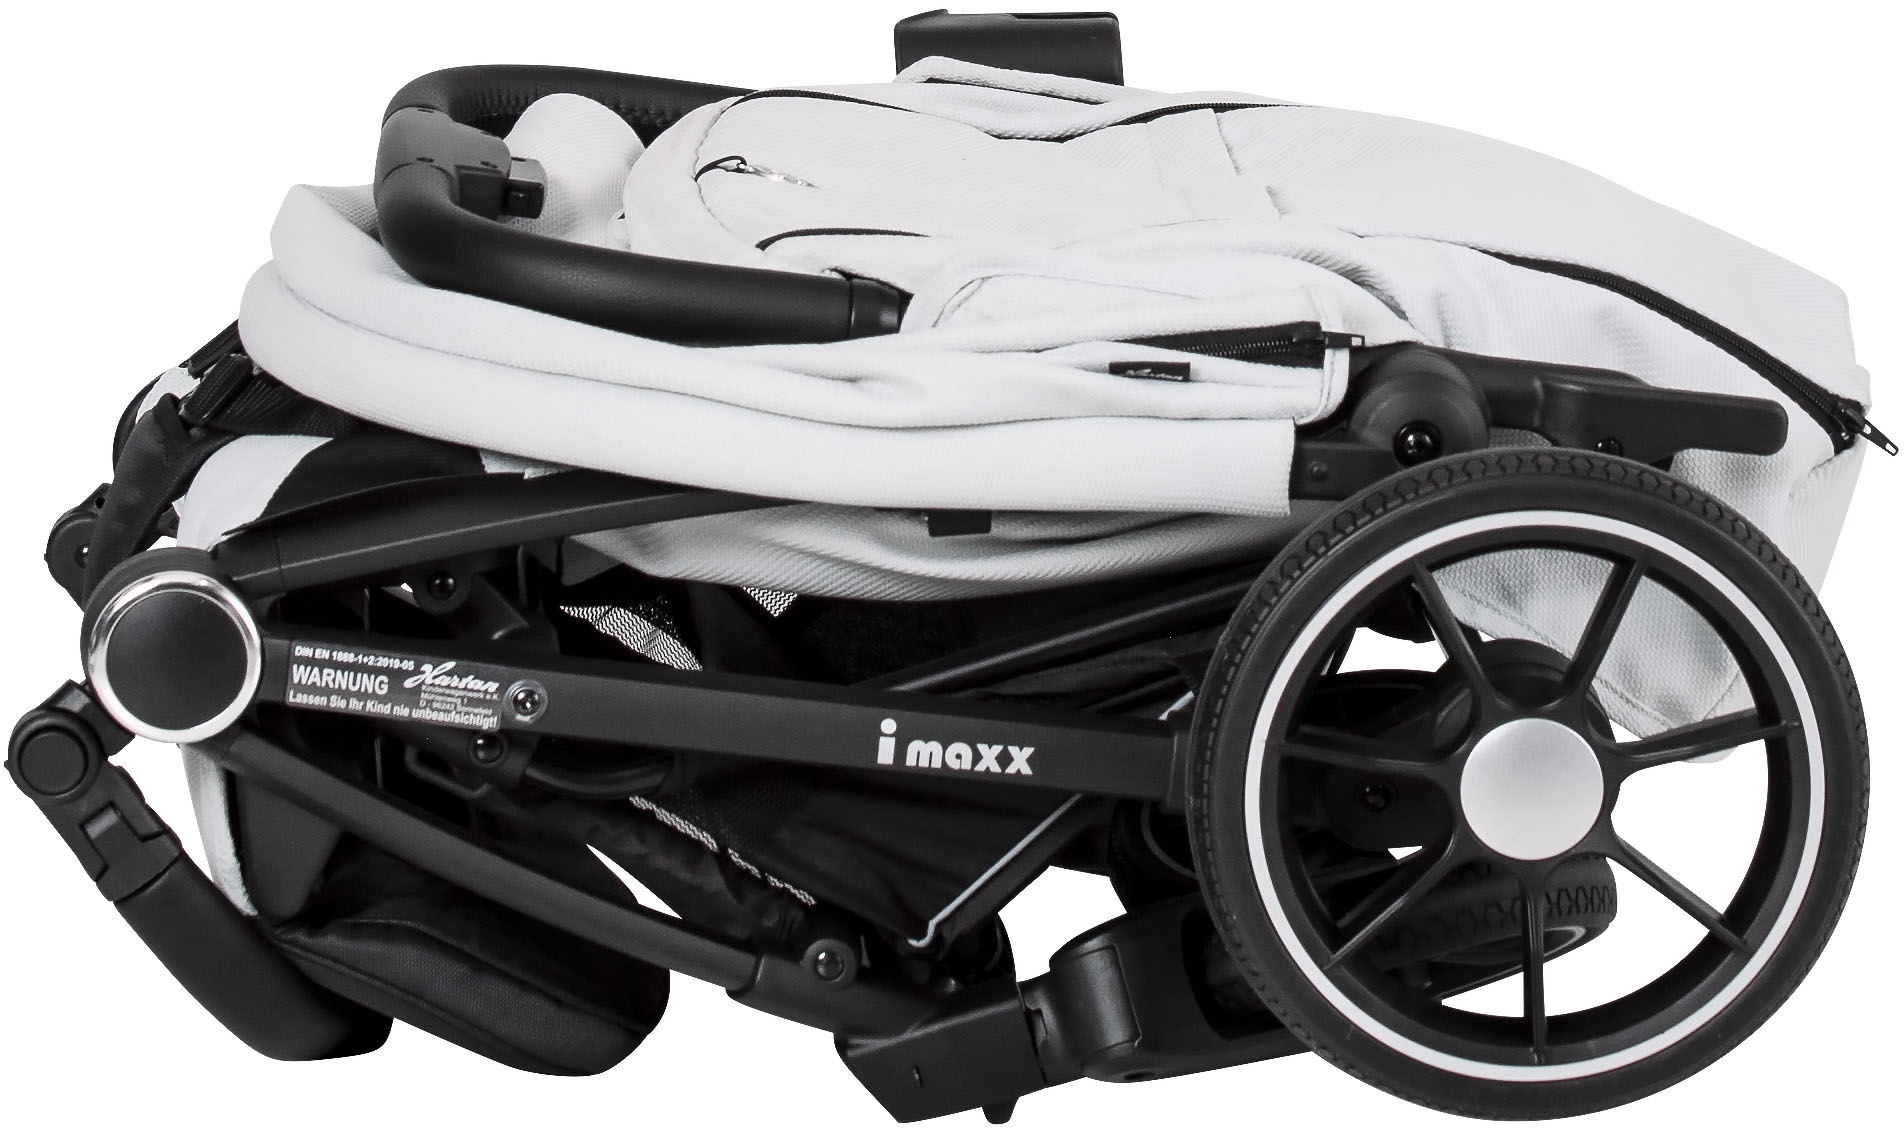 Hartan Kinder-Buggy »i-maxx - Buggy 1«, 22 kg, mit Regenschutz & Cupholder